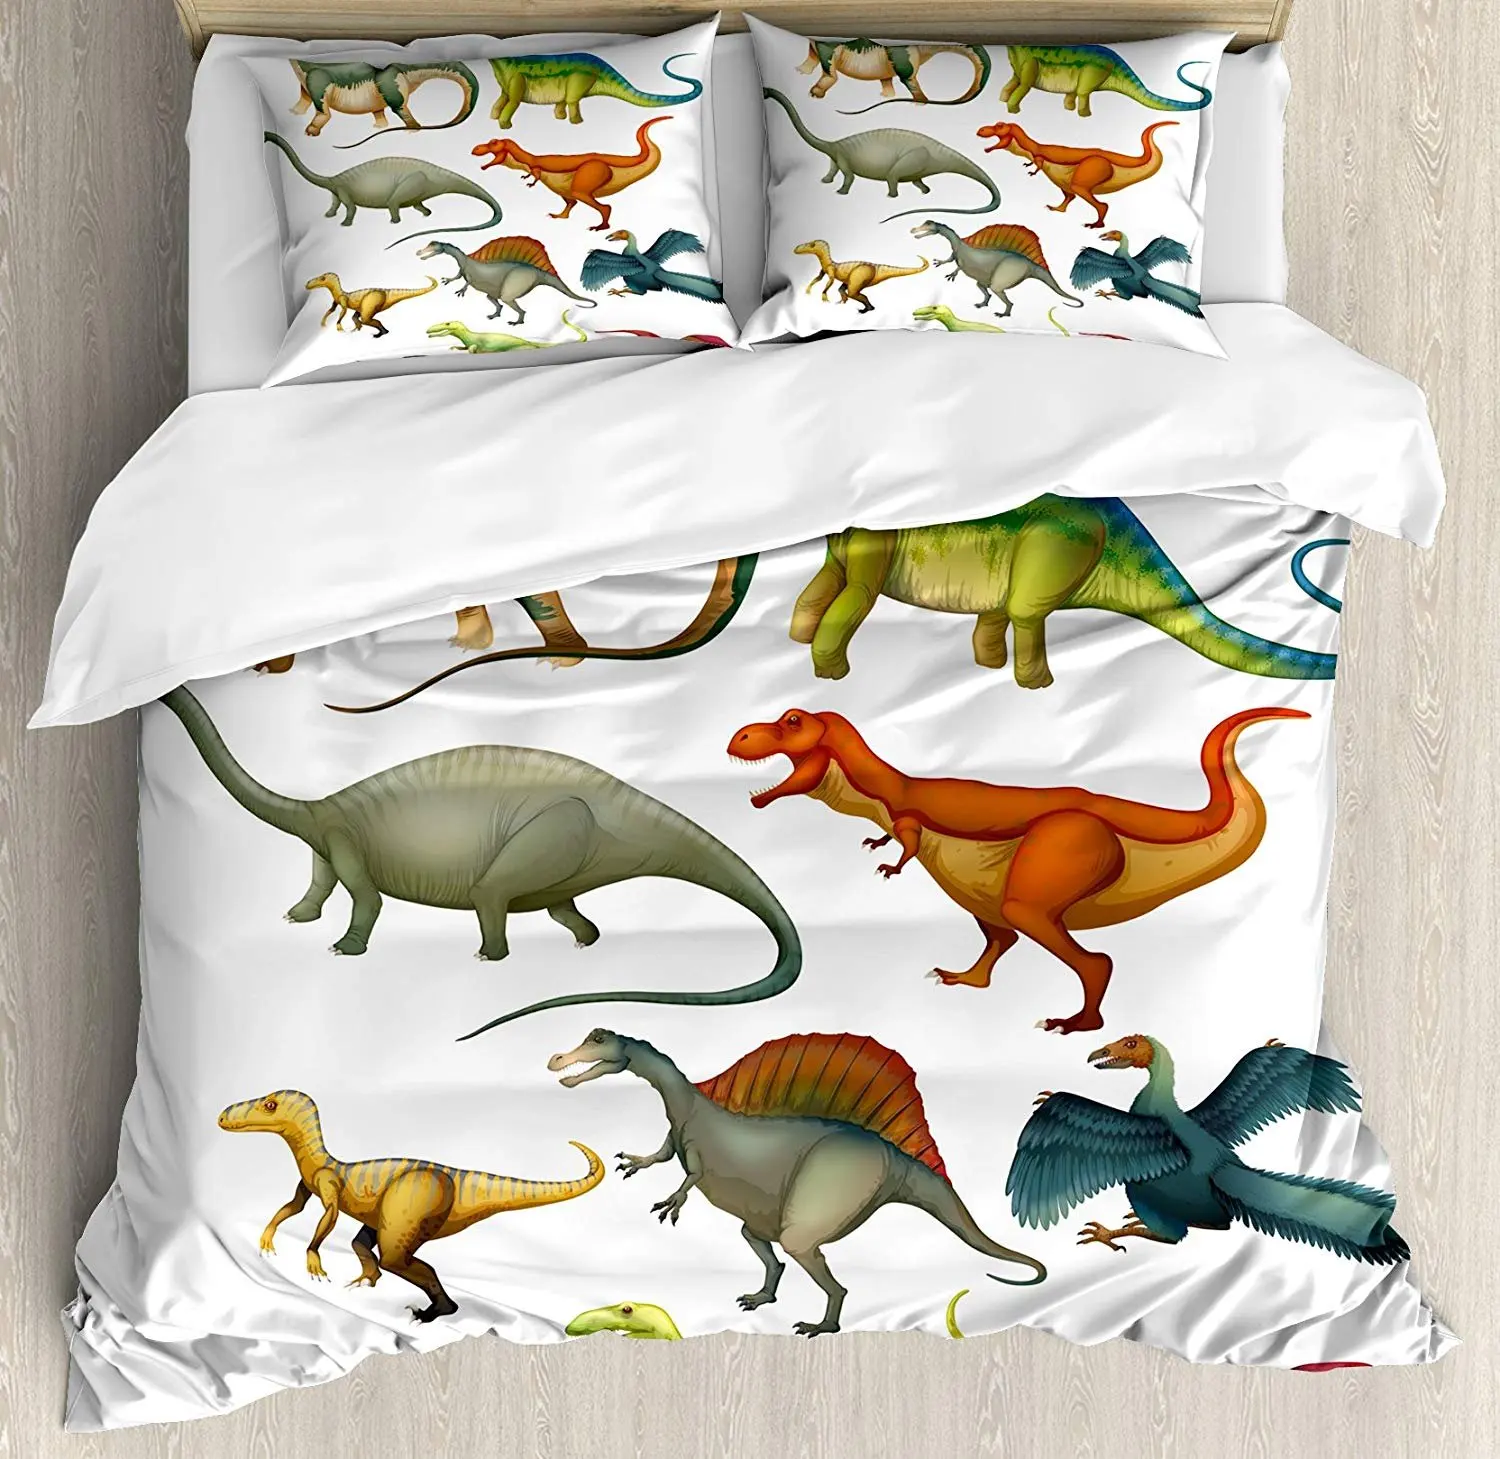 

Dinosaur Bedding Set Various Different Ancient Animals from Jurassic Period Cartoon Collection Mammals Duvet Cover Pillowcase